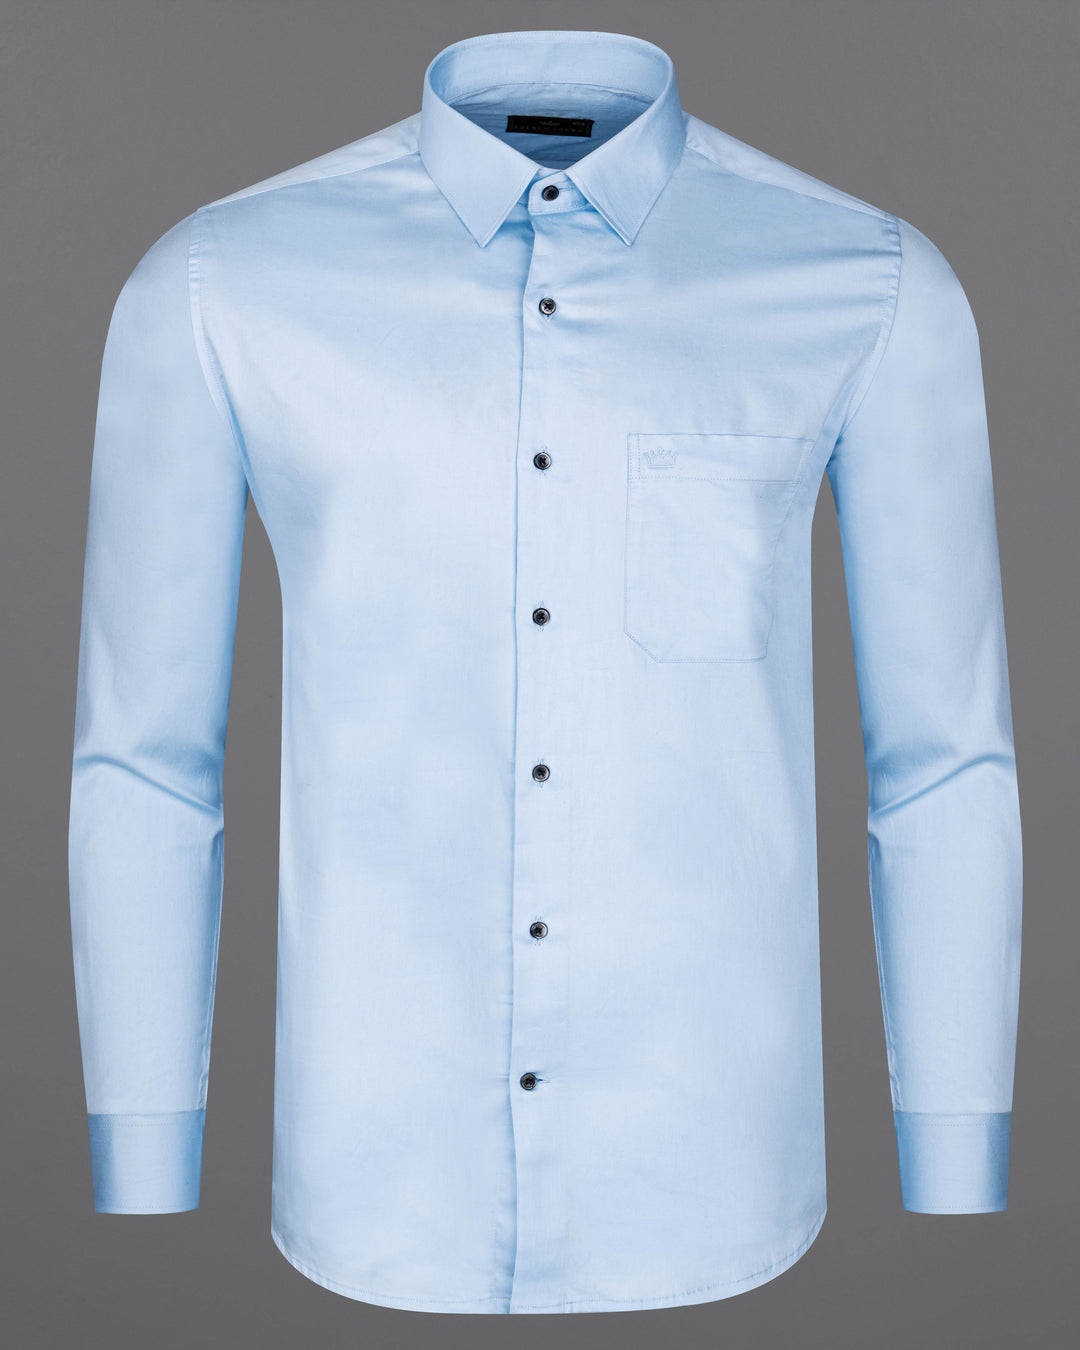 Stylish Mens Fashion Light Blue Long Sleeve Shirt and Navy Classic Pant  Ensemble | MUSE AI